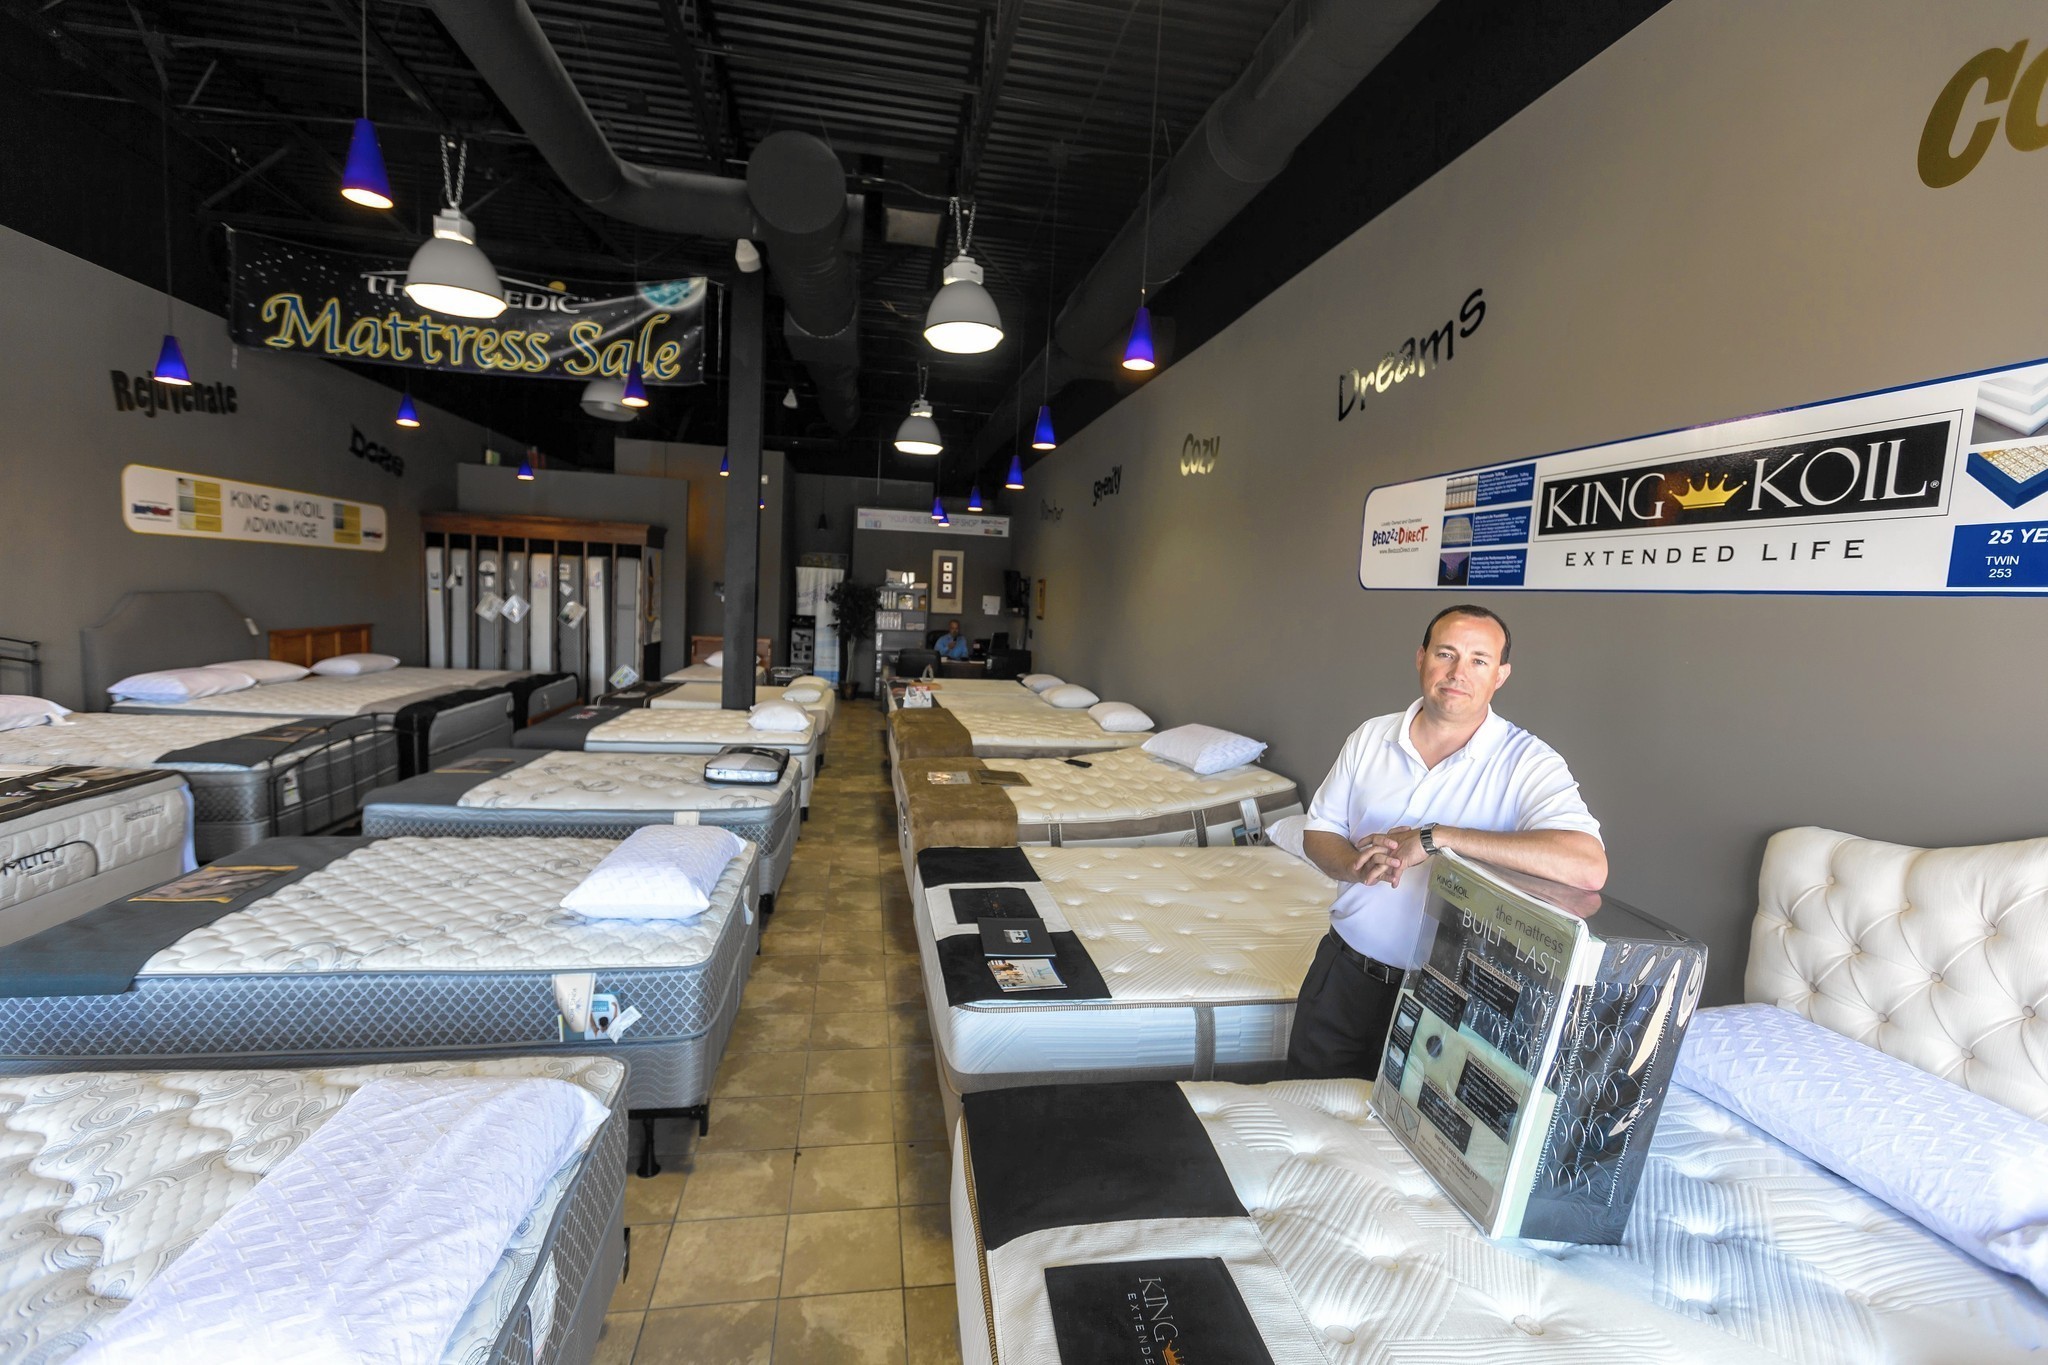 ct-ptb-new-mattress-stores-st-0621-20150619